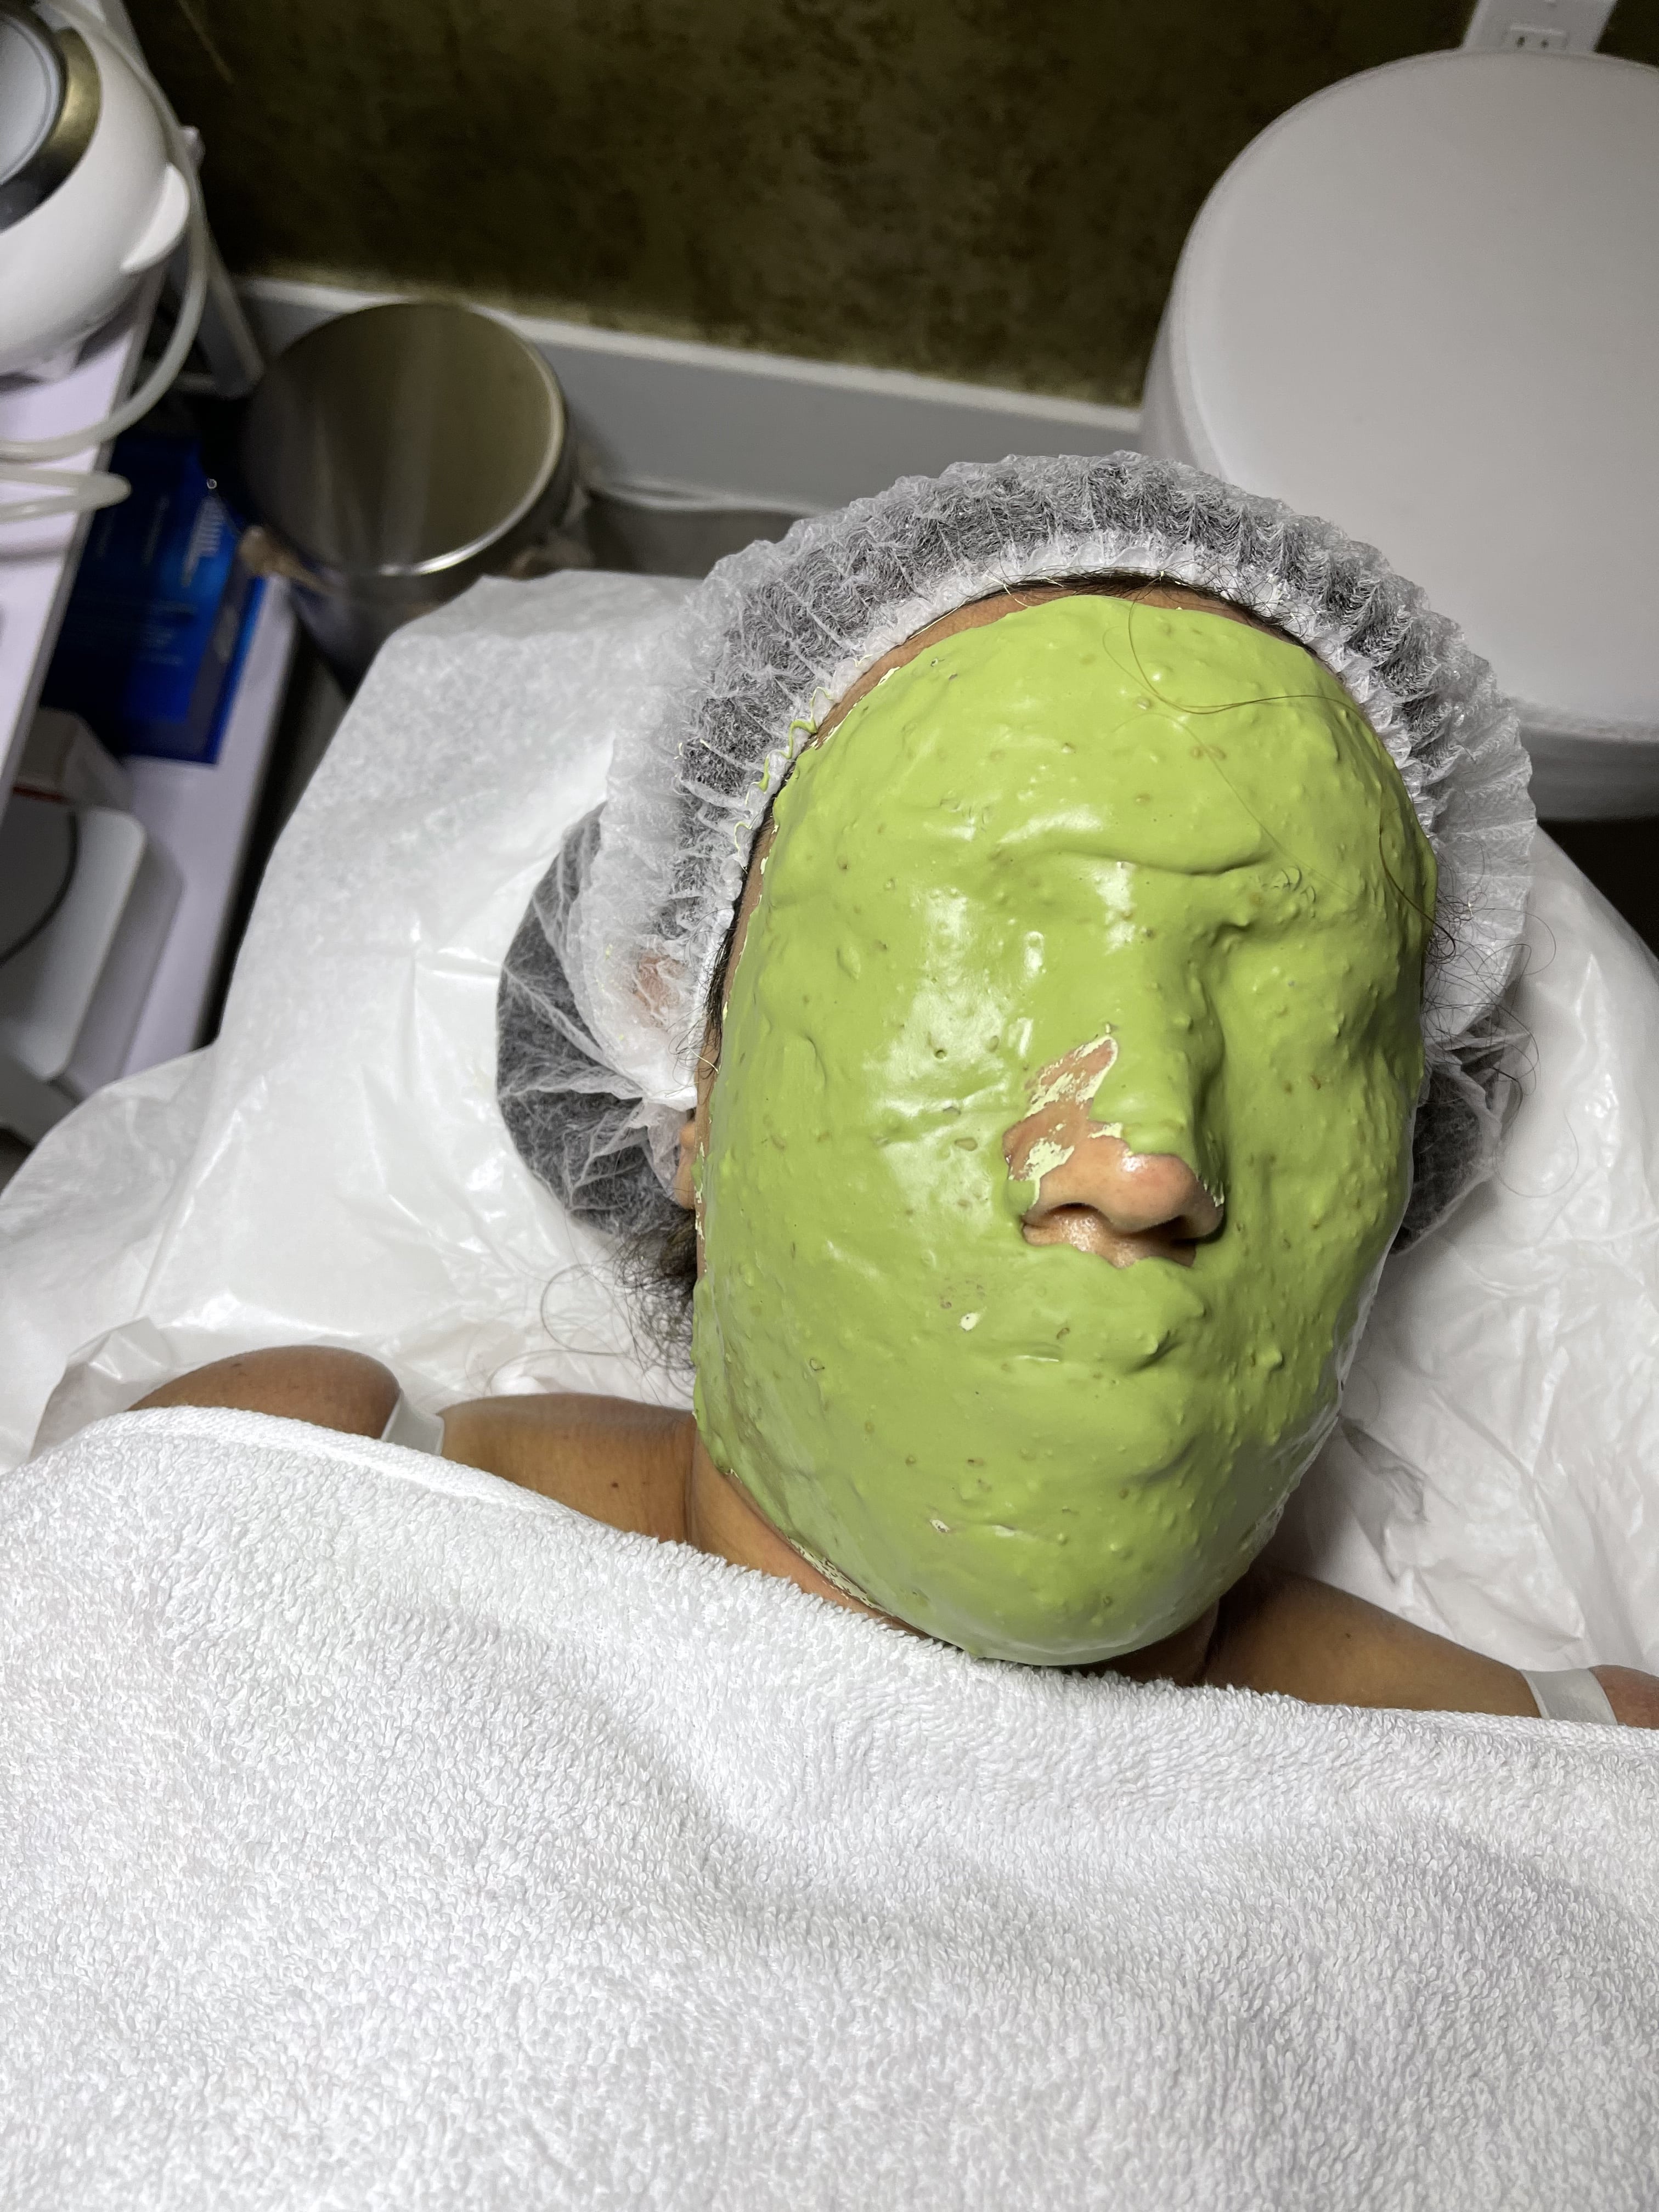 A woman wearing a green mask